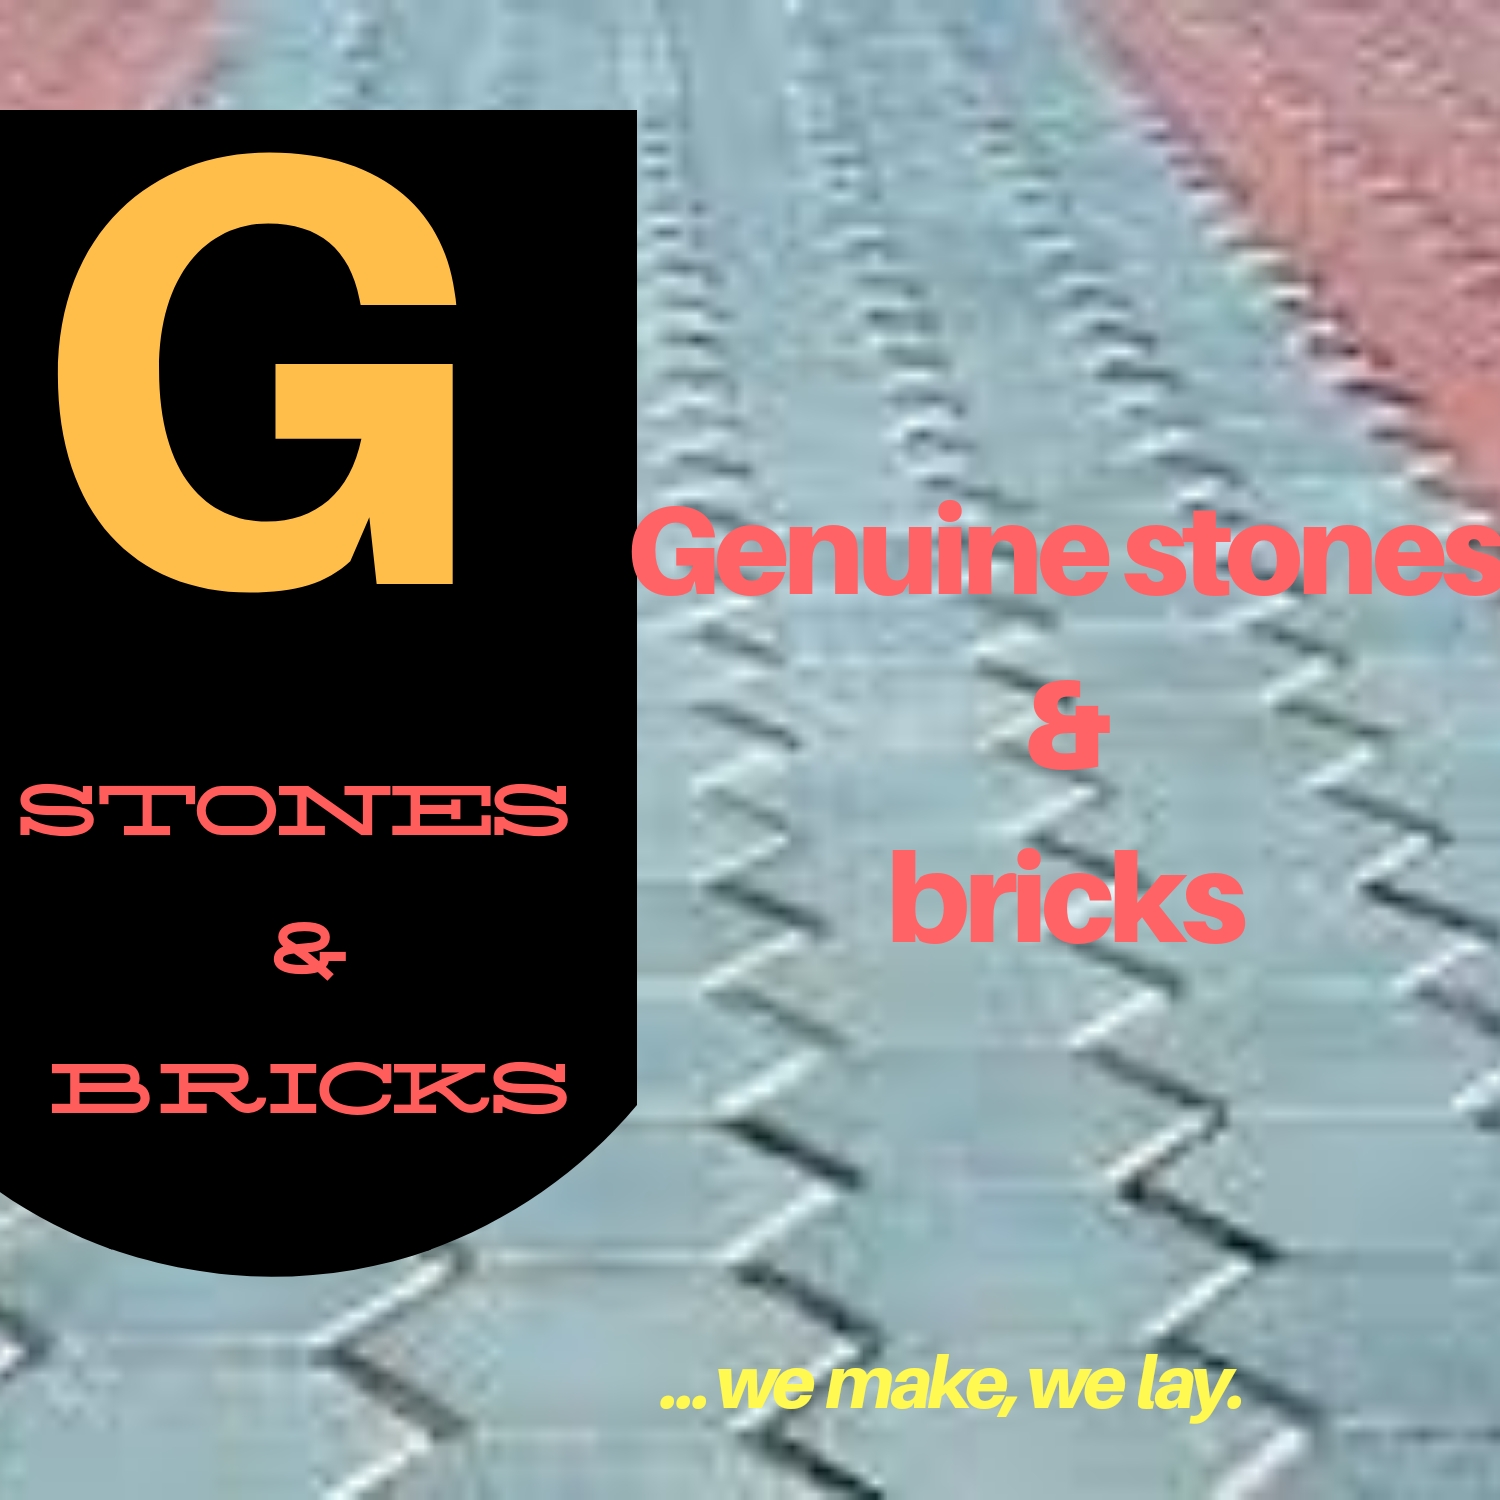 Genuine stones and bricks provider